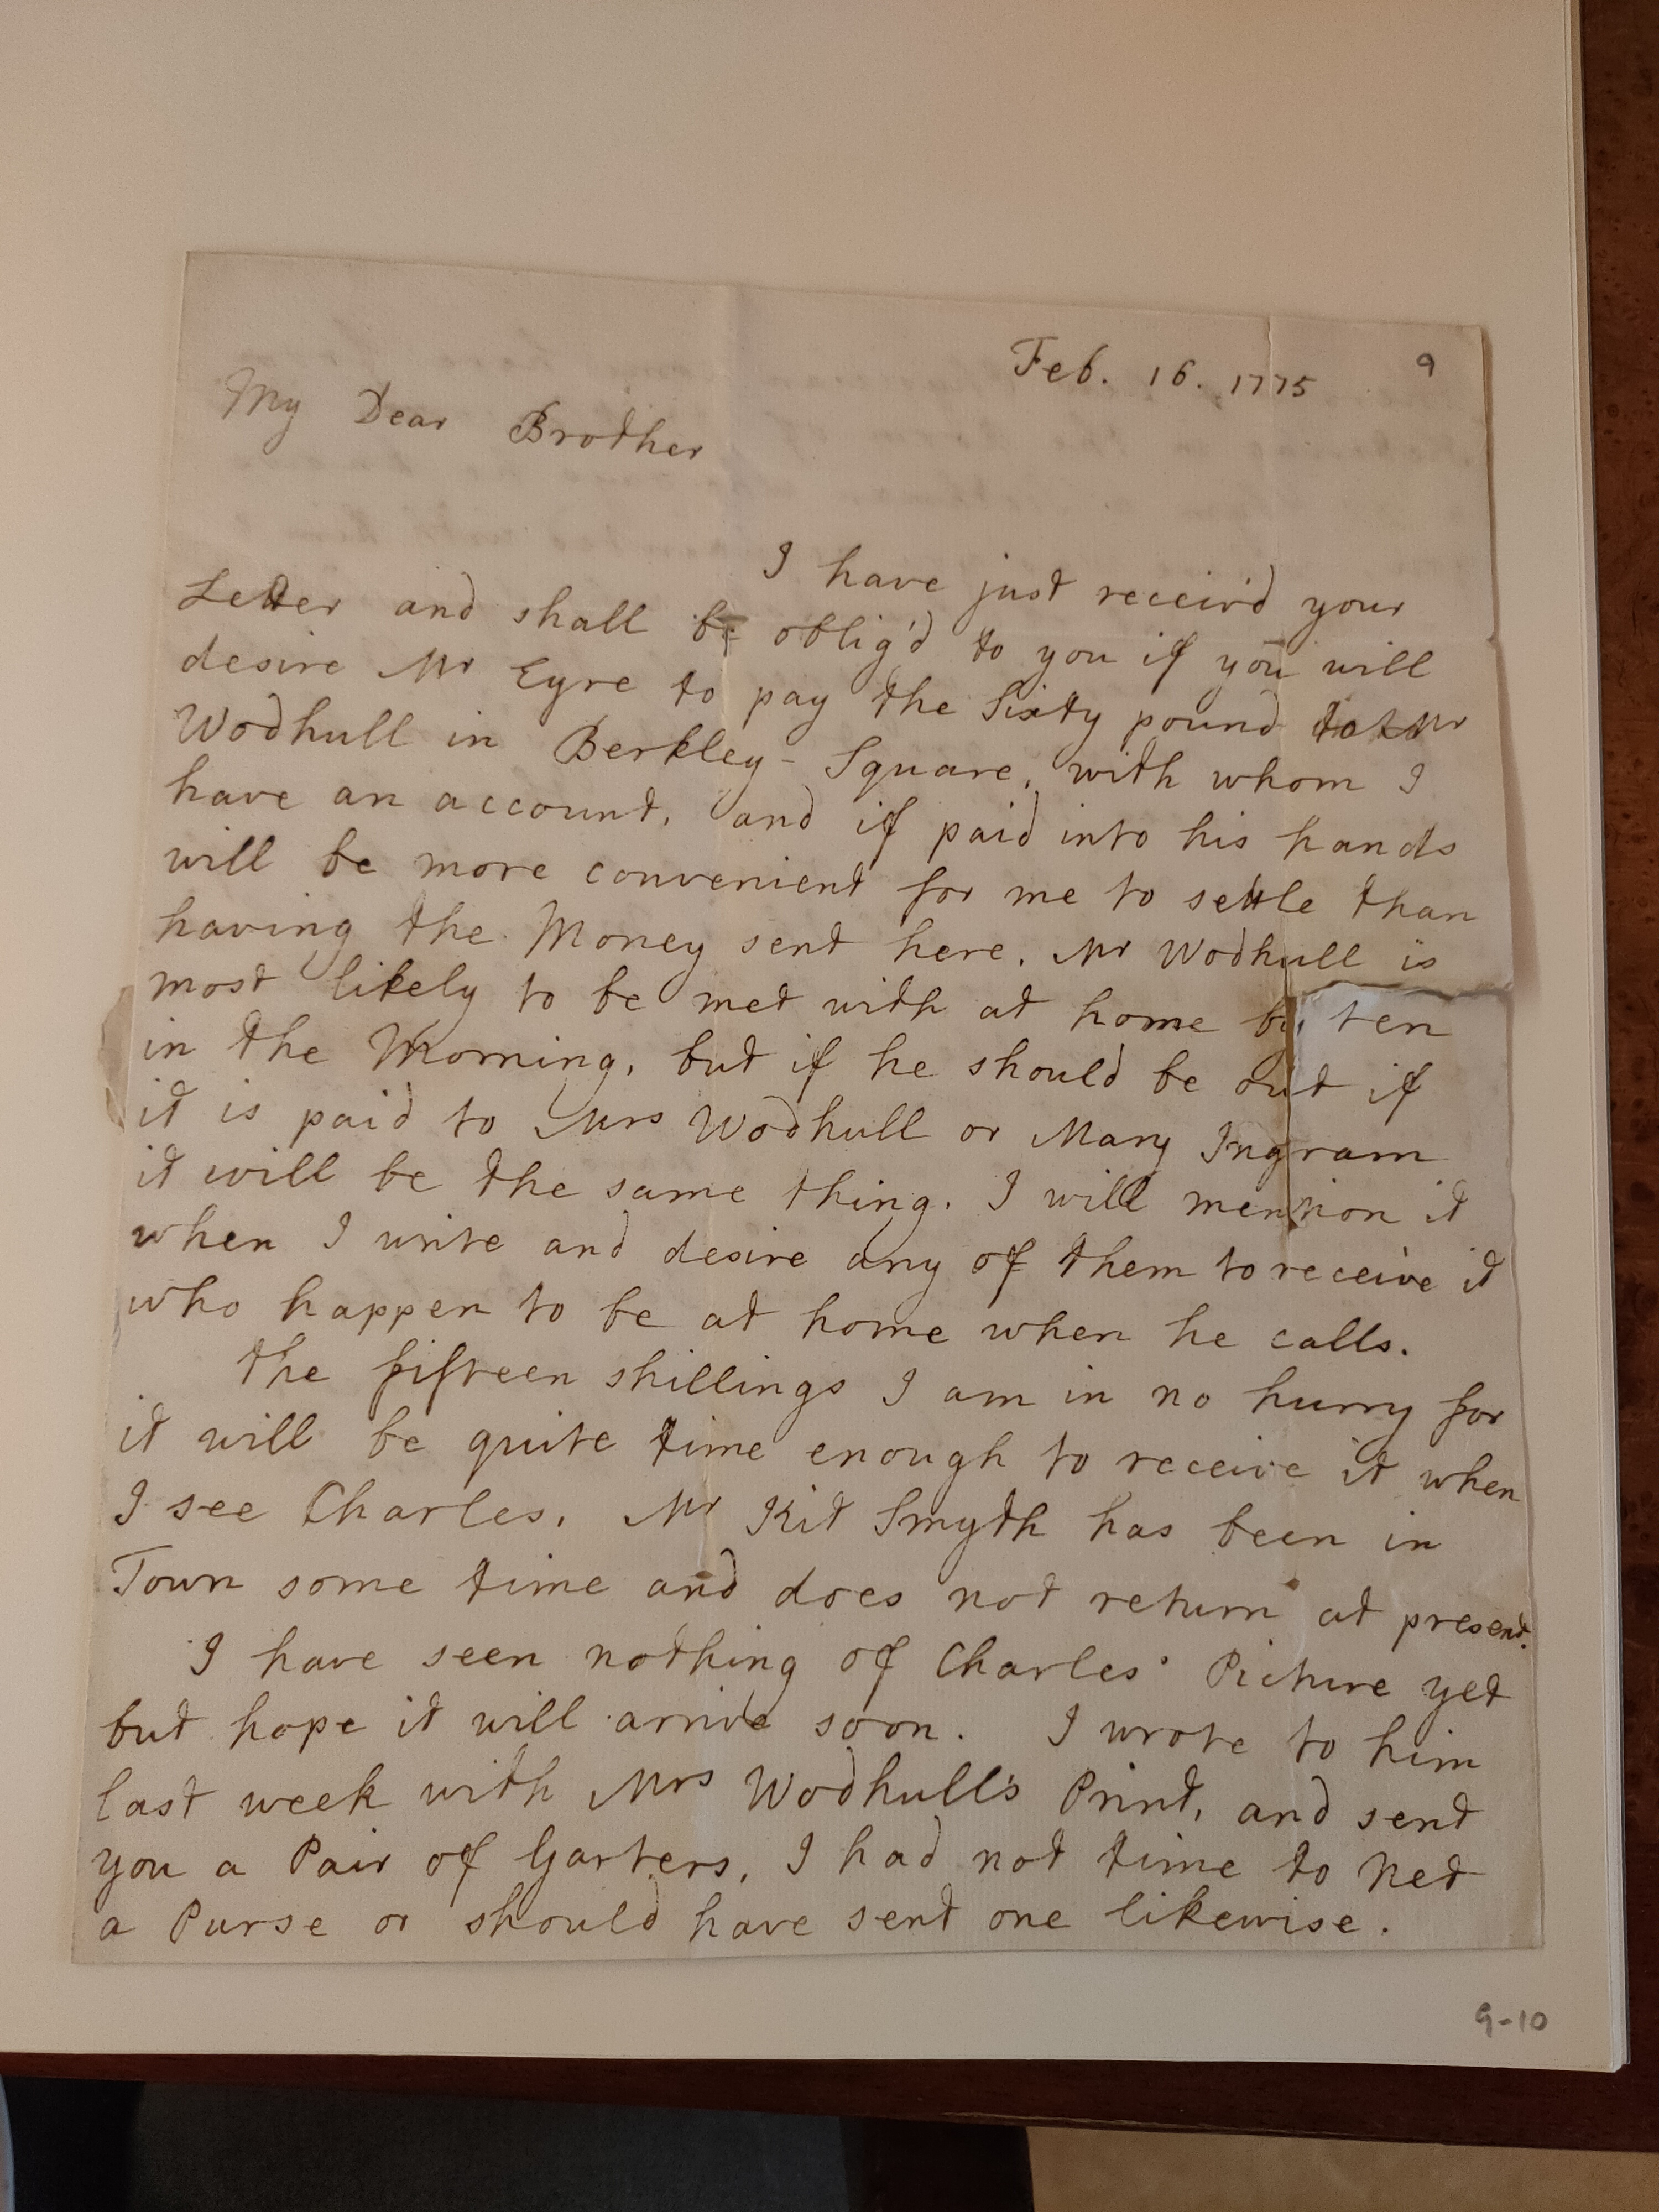 Image #1 of letter: Barbara Johnson to George William Johnson, 16 February 1775